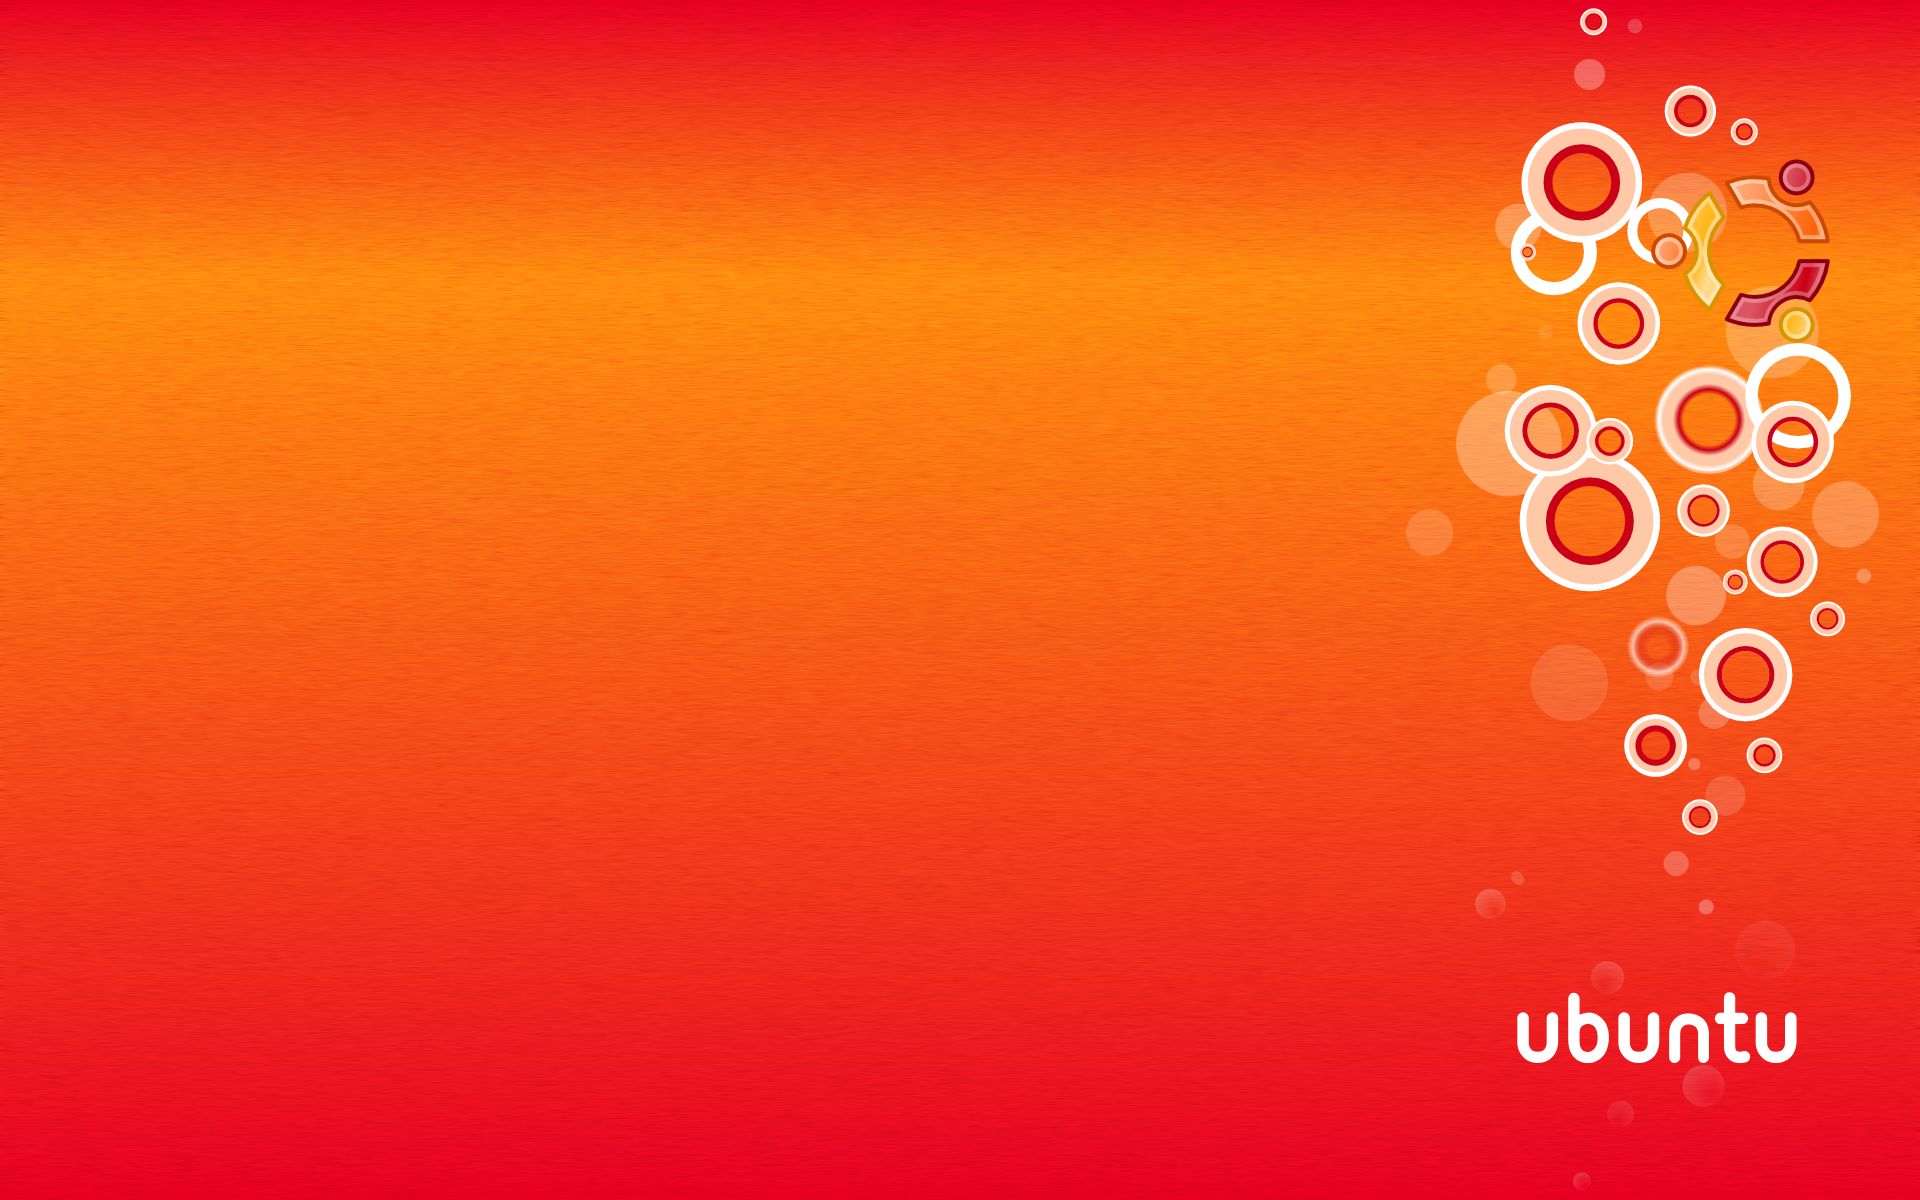 ubuntu fondo de pantalla,rojo,naranja,amarillo,cielo,melocotón